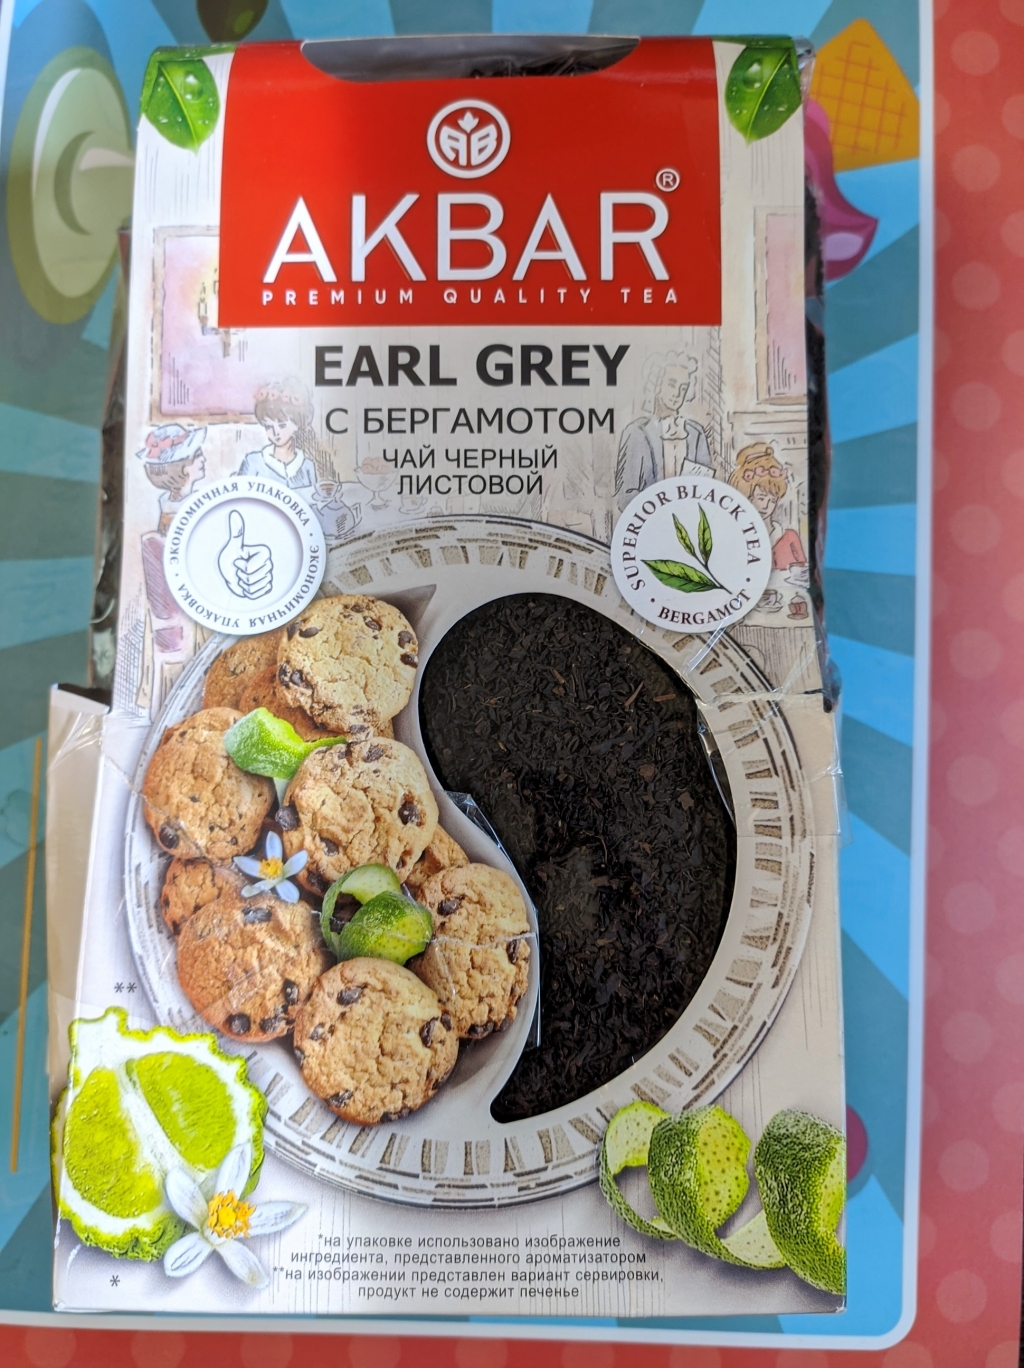 Akbar "Корзинка" Earl Grey листовой чай, 500 г - Ароматный эрл грей